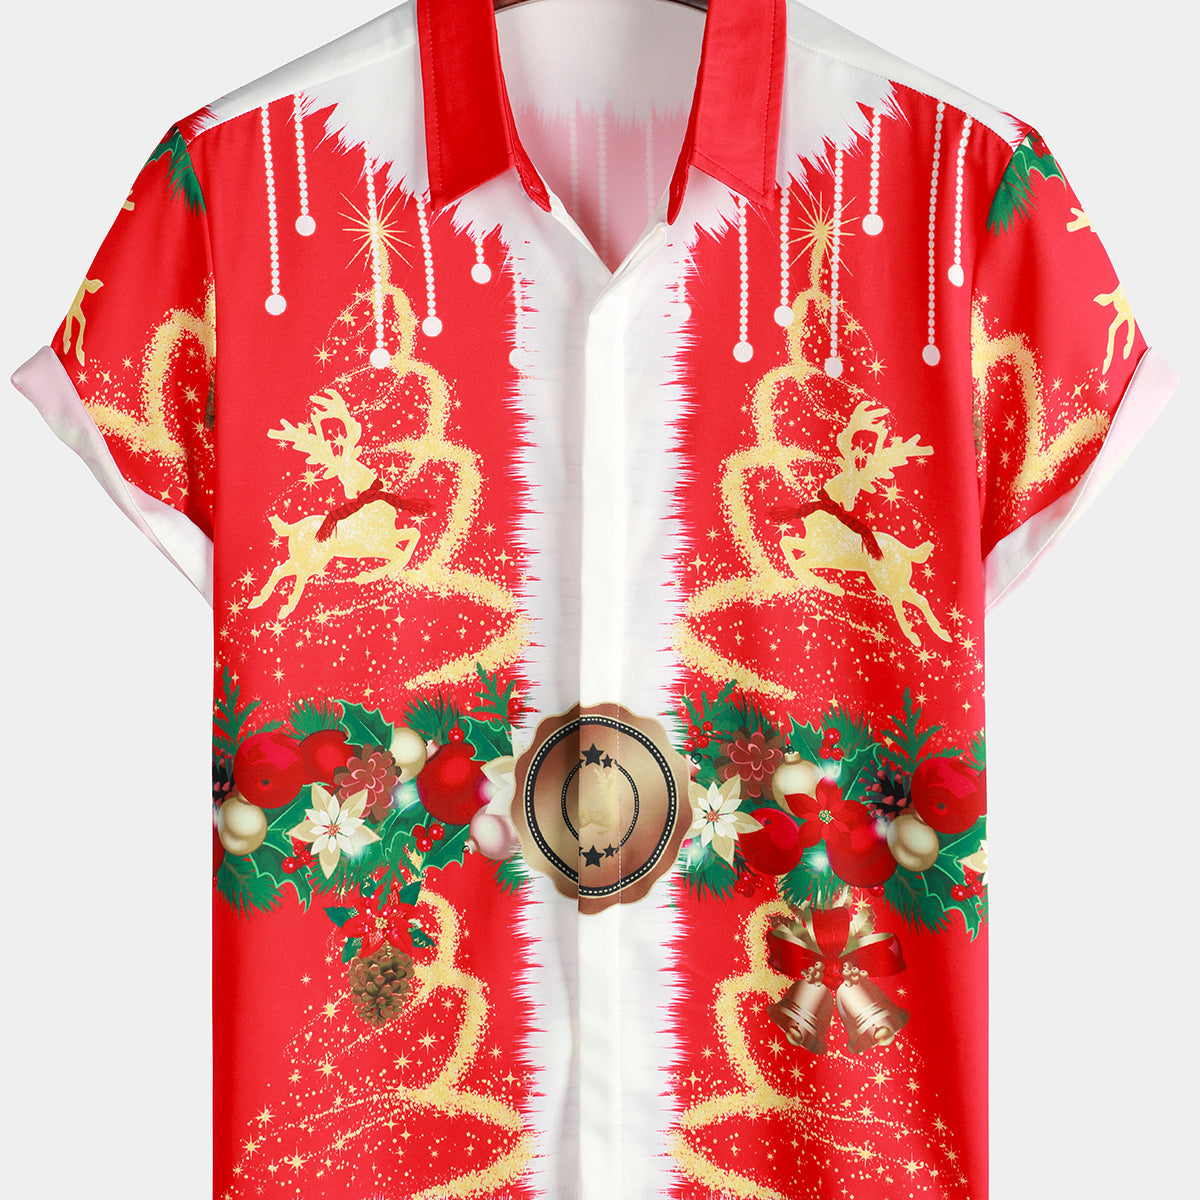 Camisa de manga corta con solapa divertida roja con temática navideña vintage para hombre